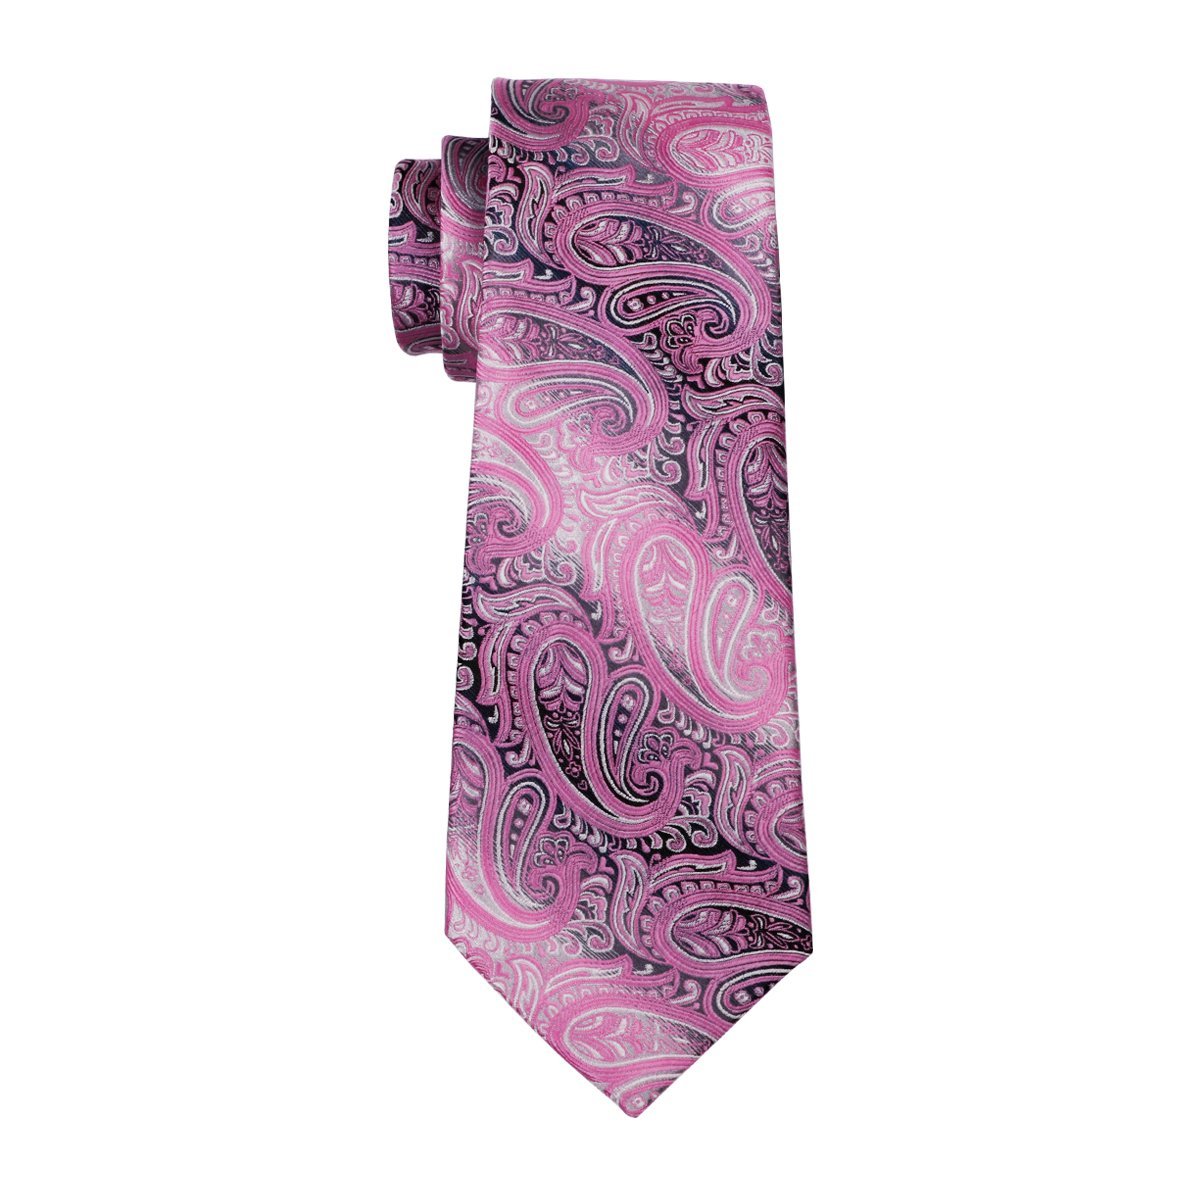 Pink Paisley Tie Pocket Square Cufflinks Gift Box Set